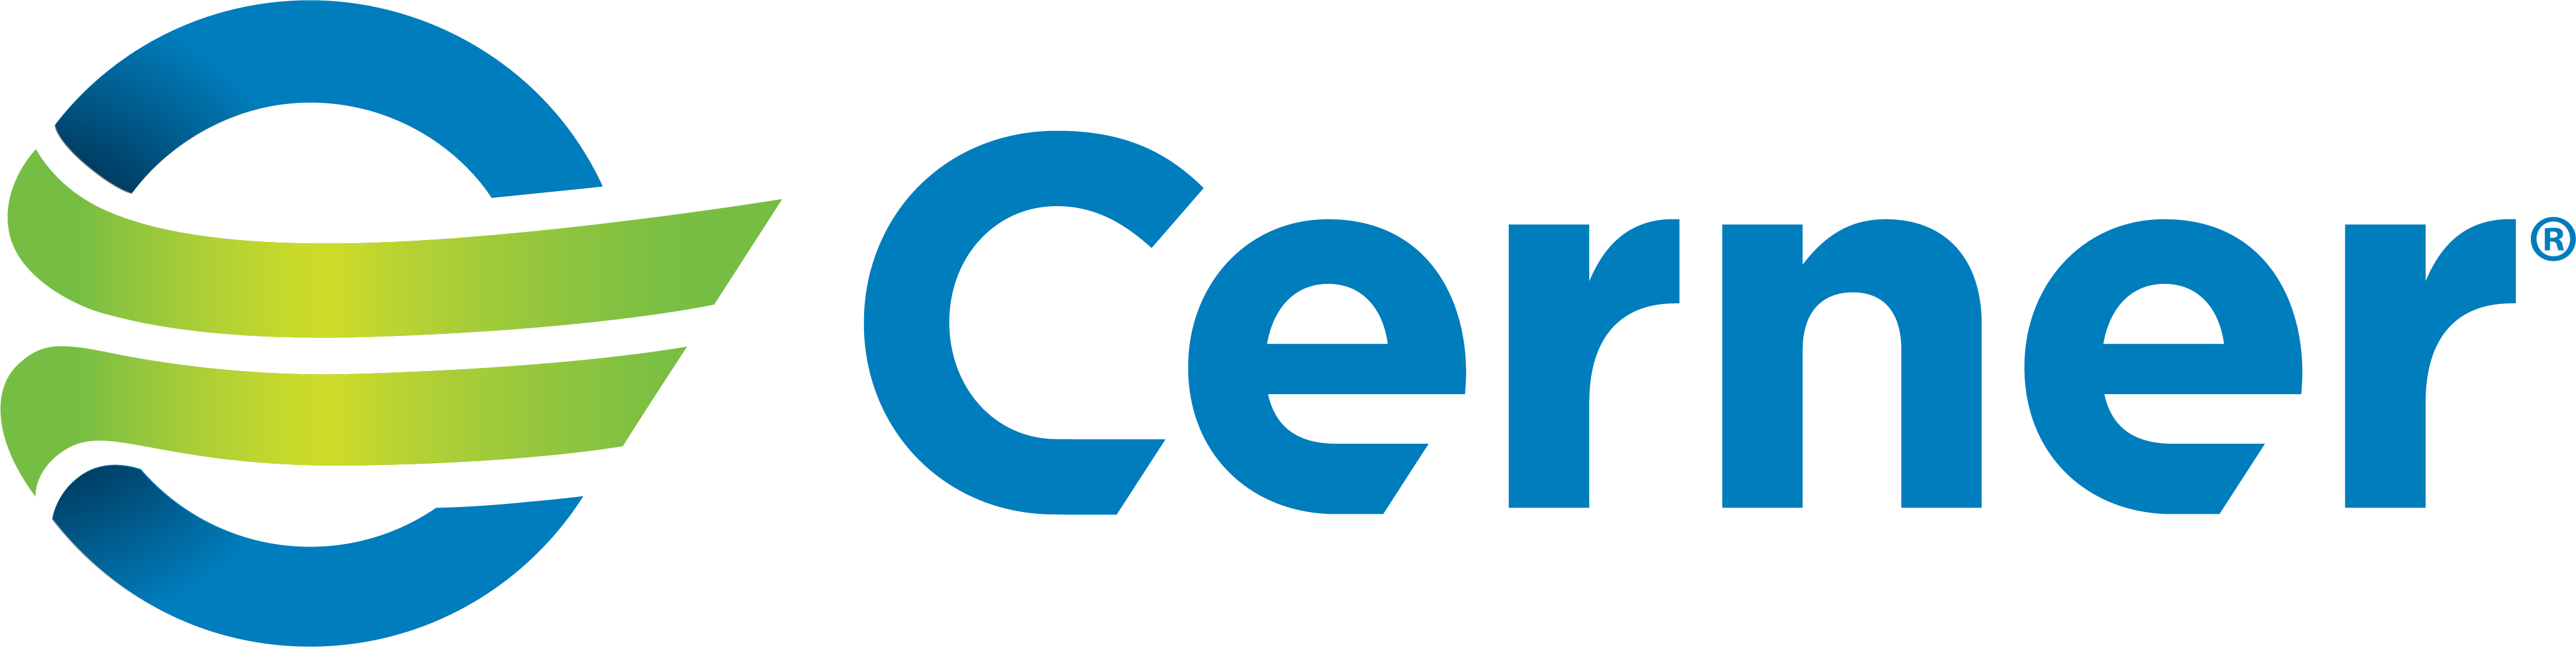 Cerner color logo horizontal